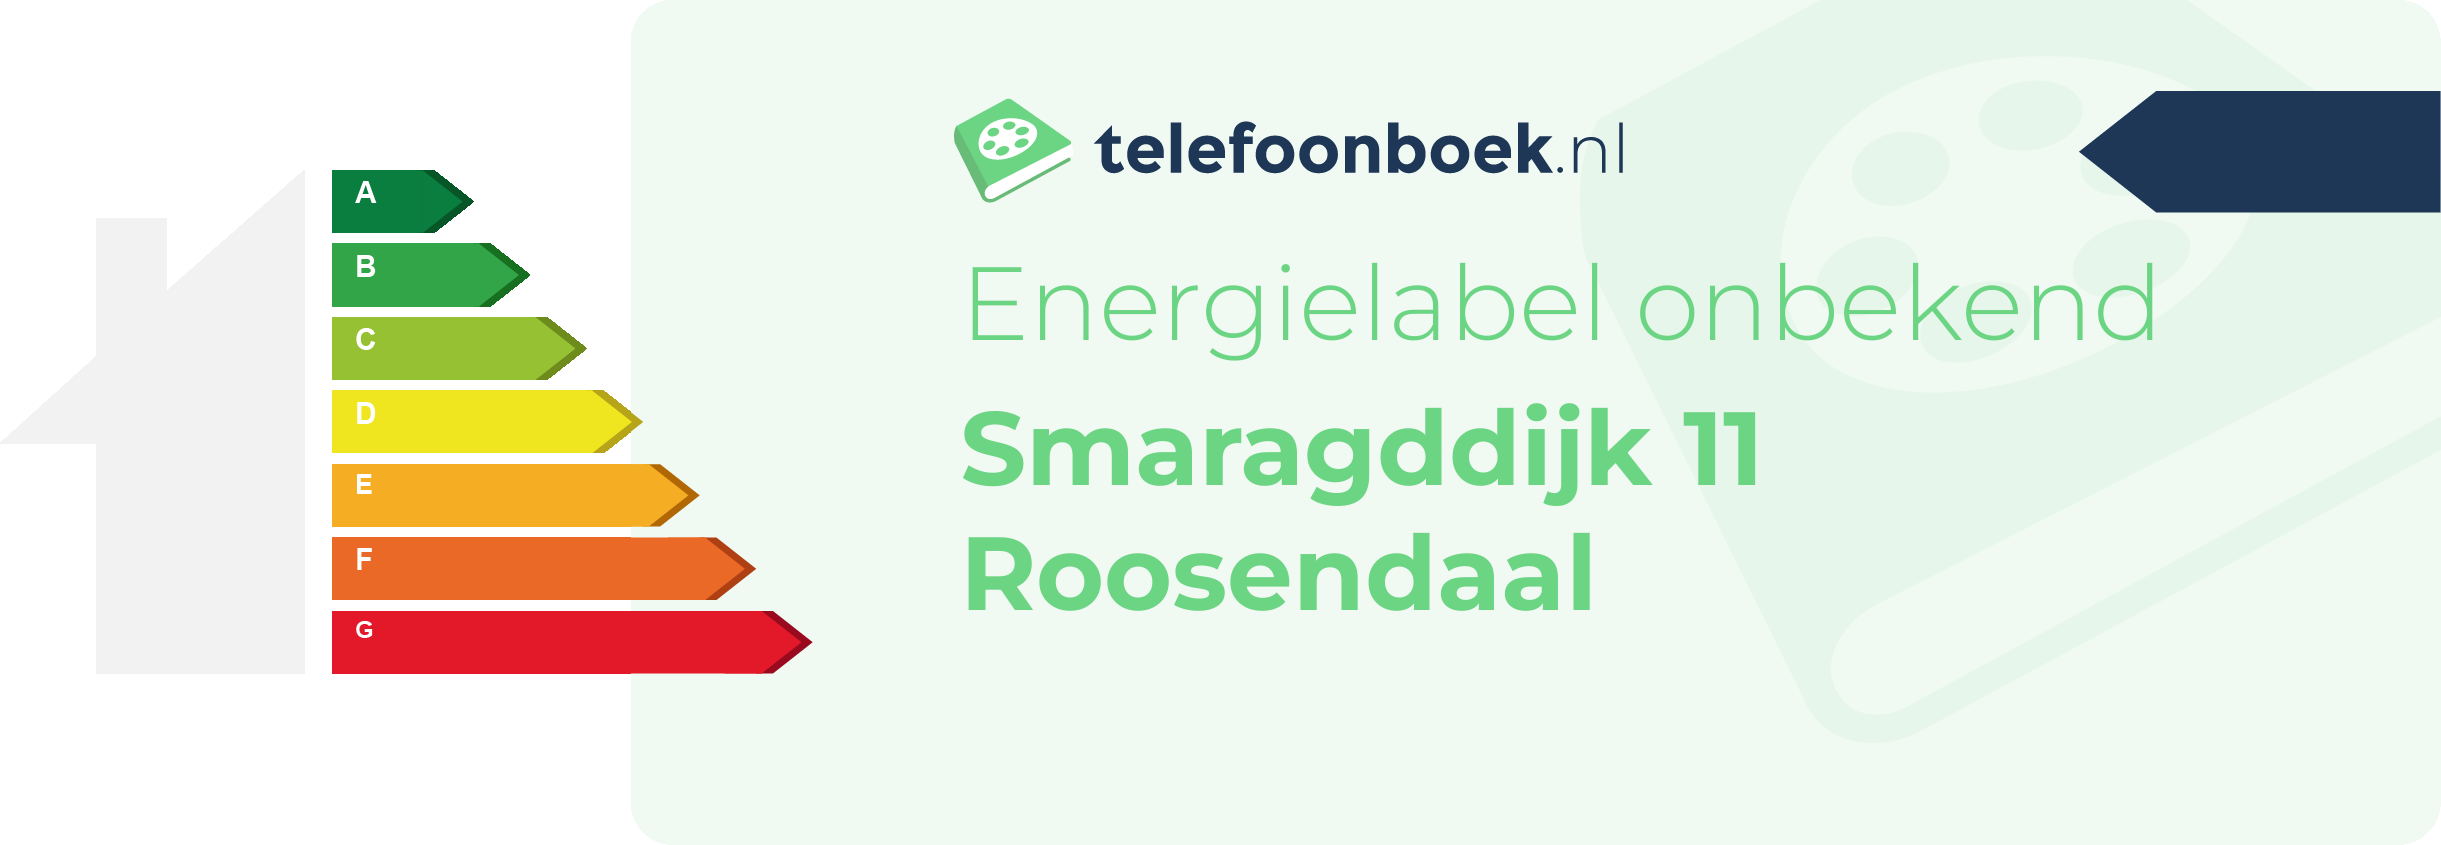 Energielabel Smaragddijk 11 Roosendaal